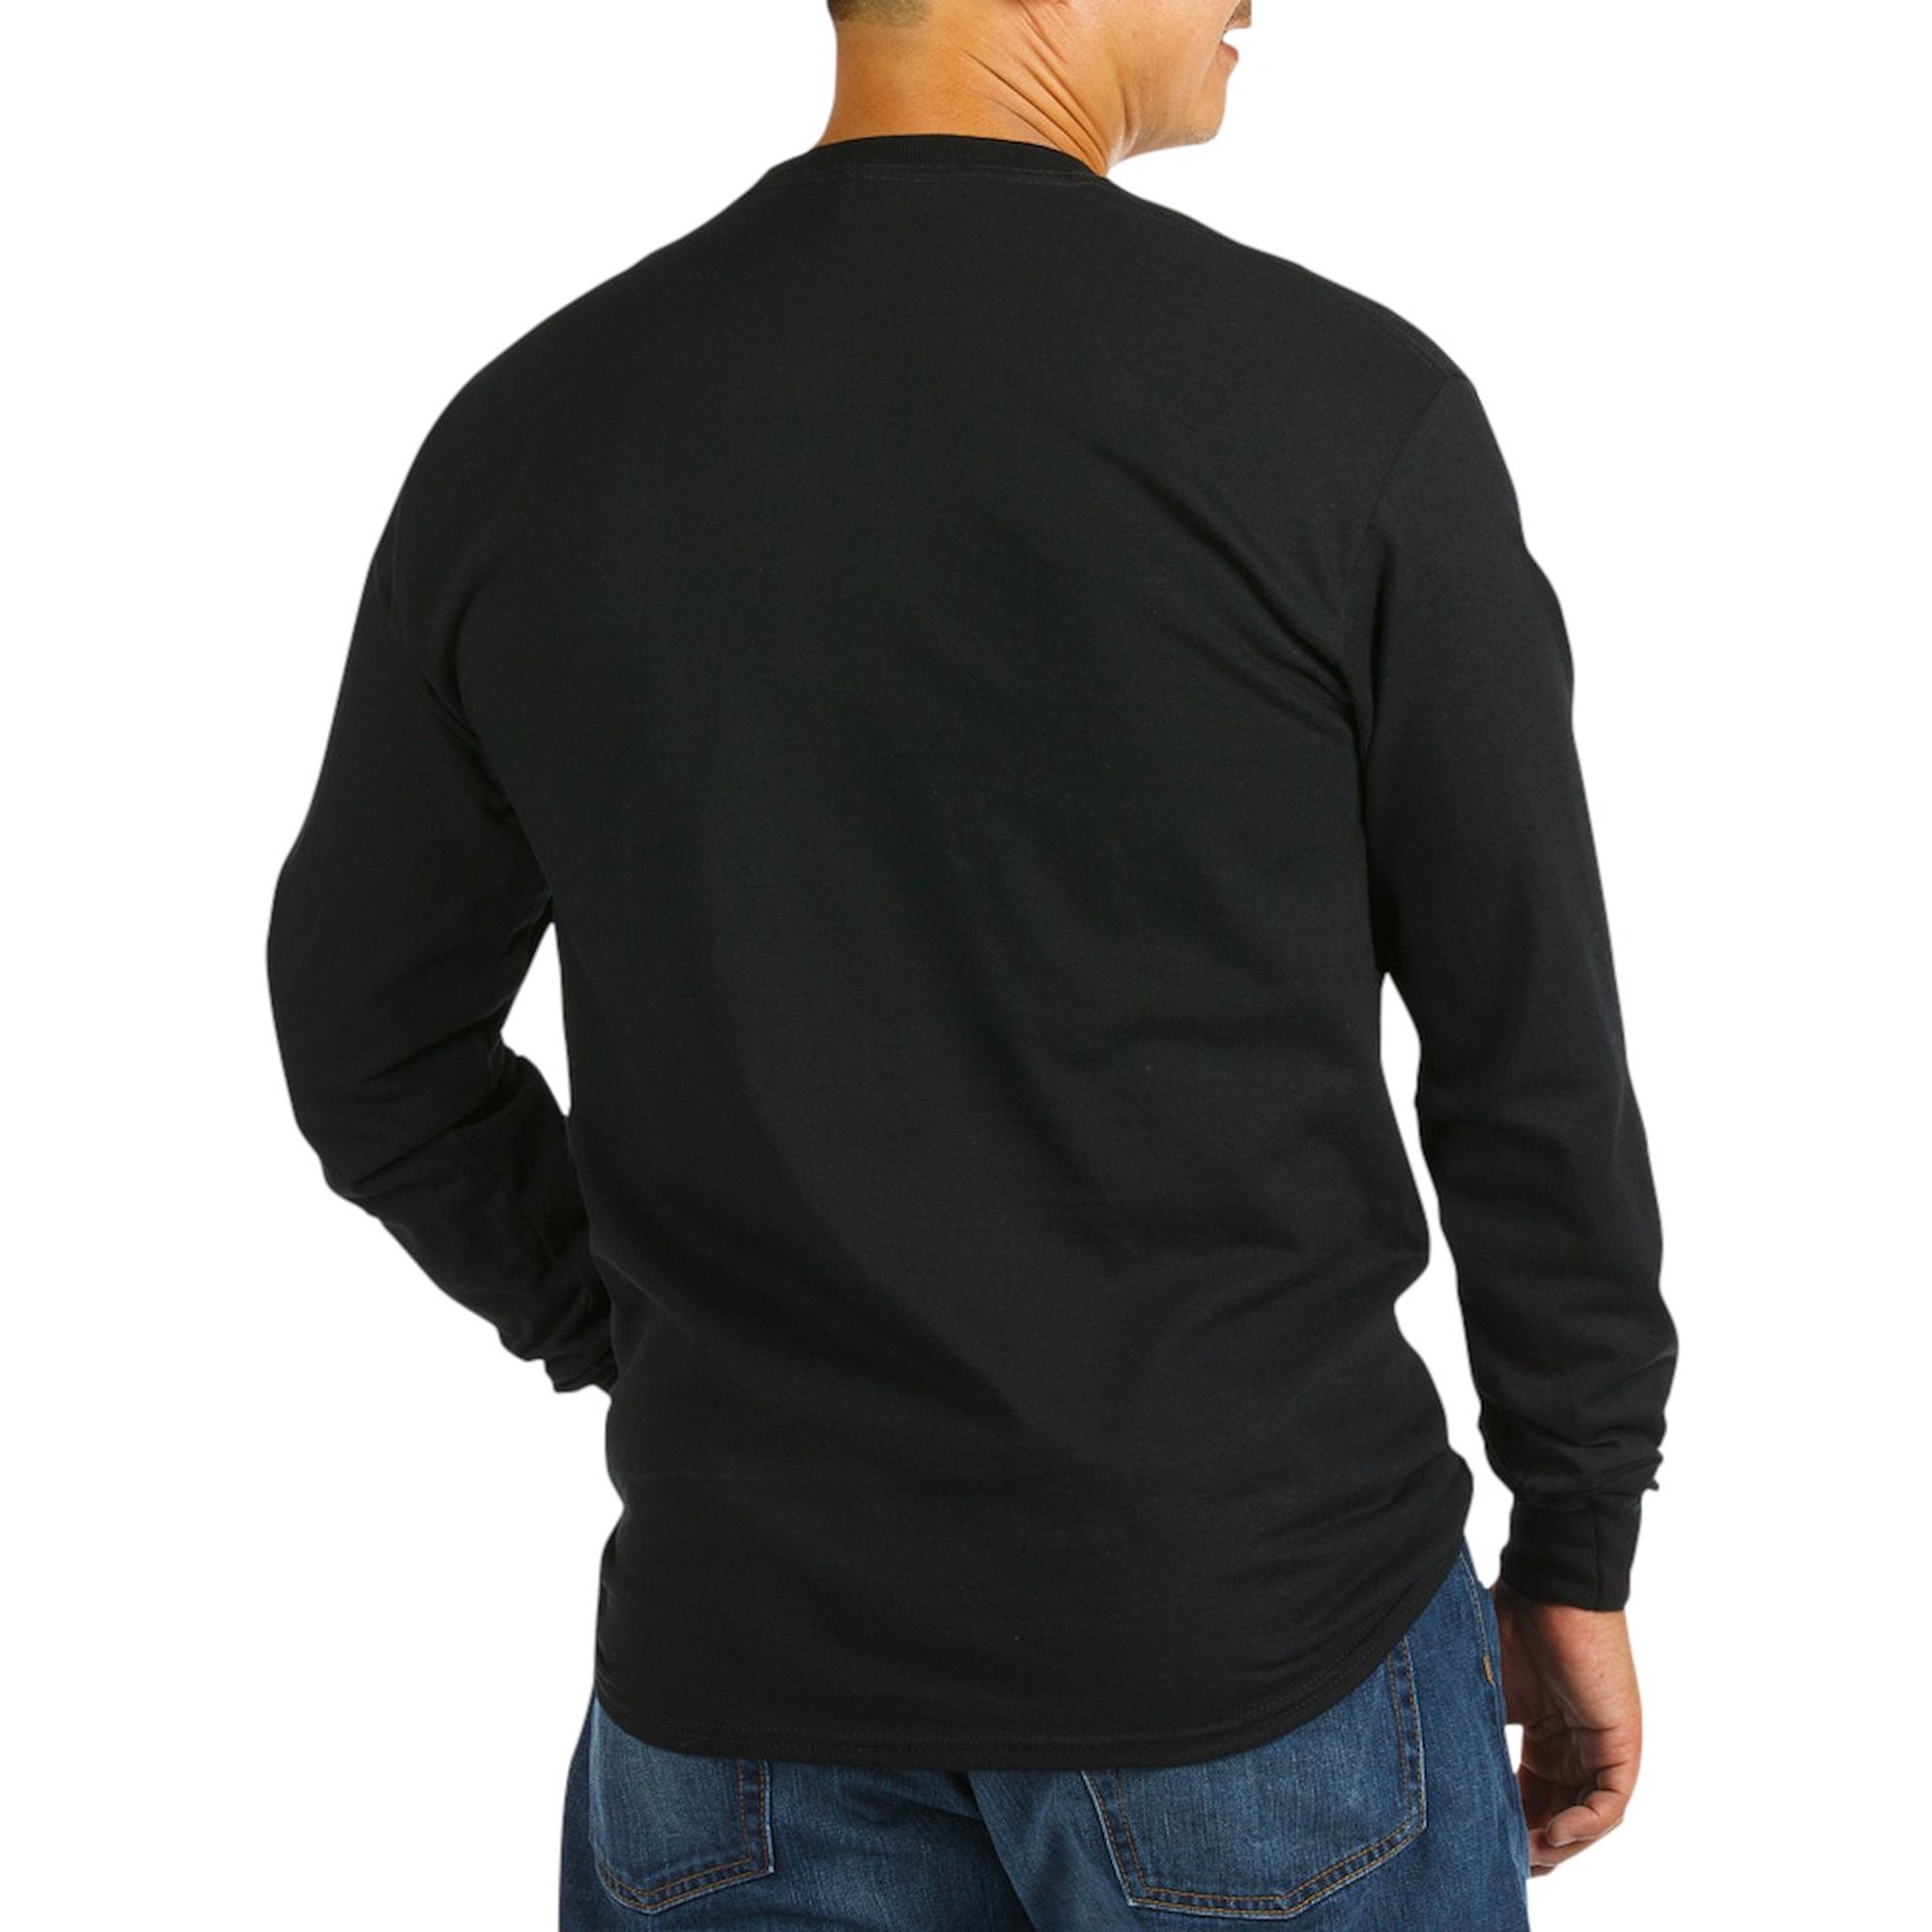 CafePress - San Diego Sunset Long Sleeve Dark T Shirt - Long Sleeve Dark T-Shirt - image 2 of 4